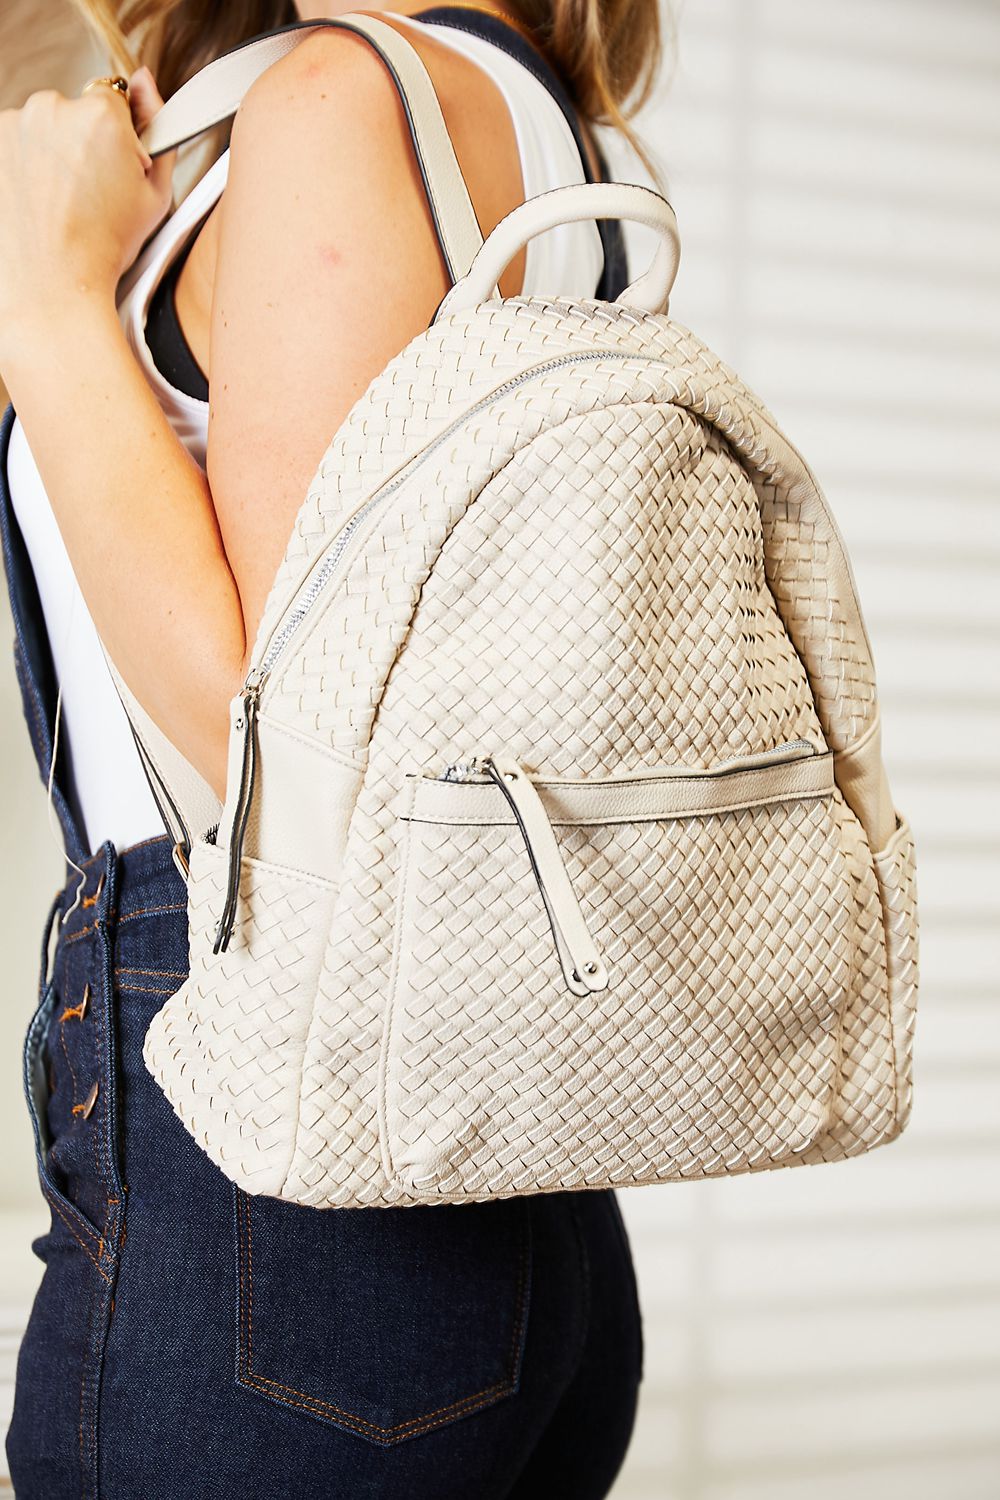 SHOMICO PU Leather Backpack - Fashion BTQ